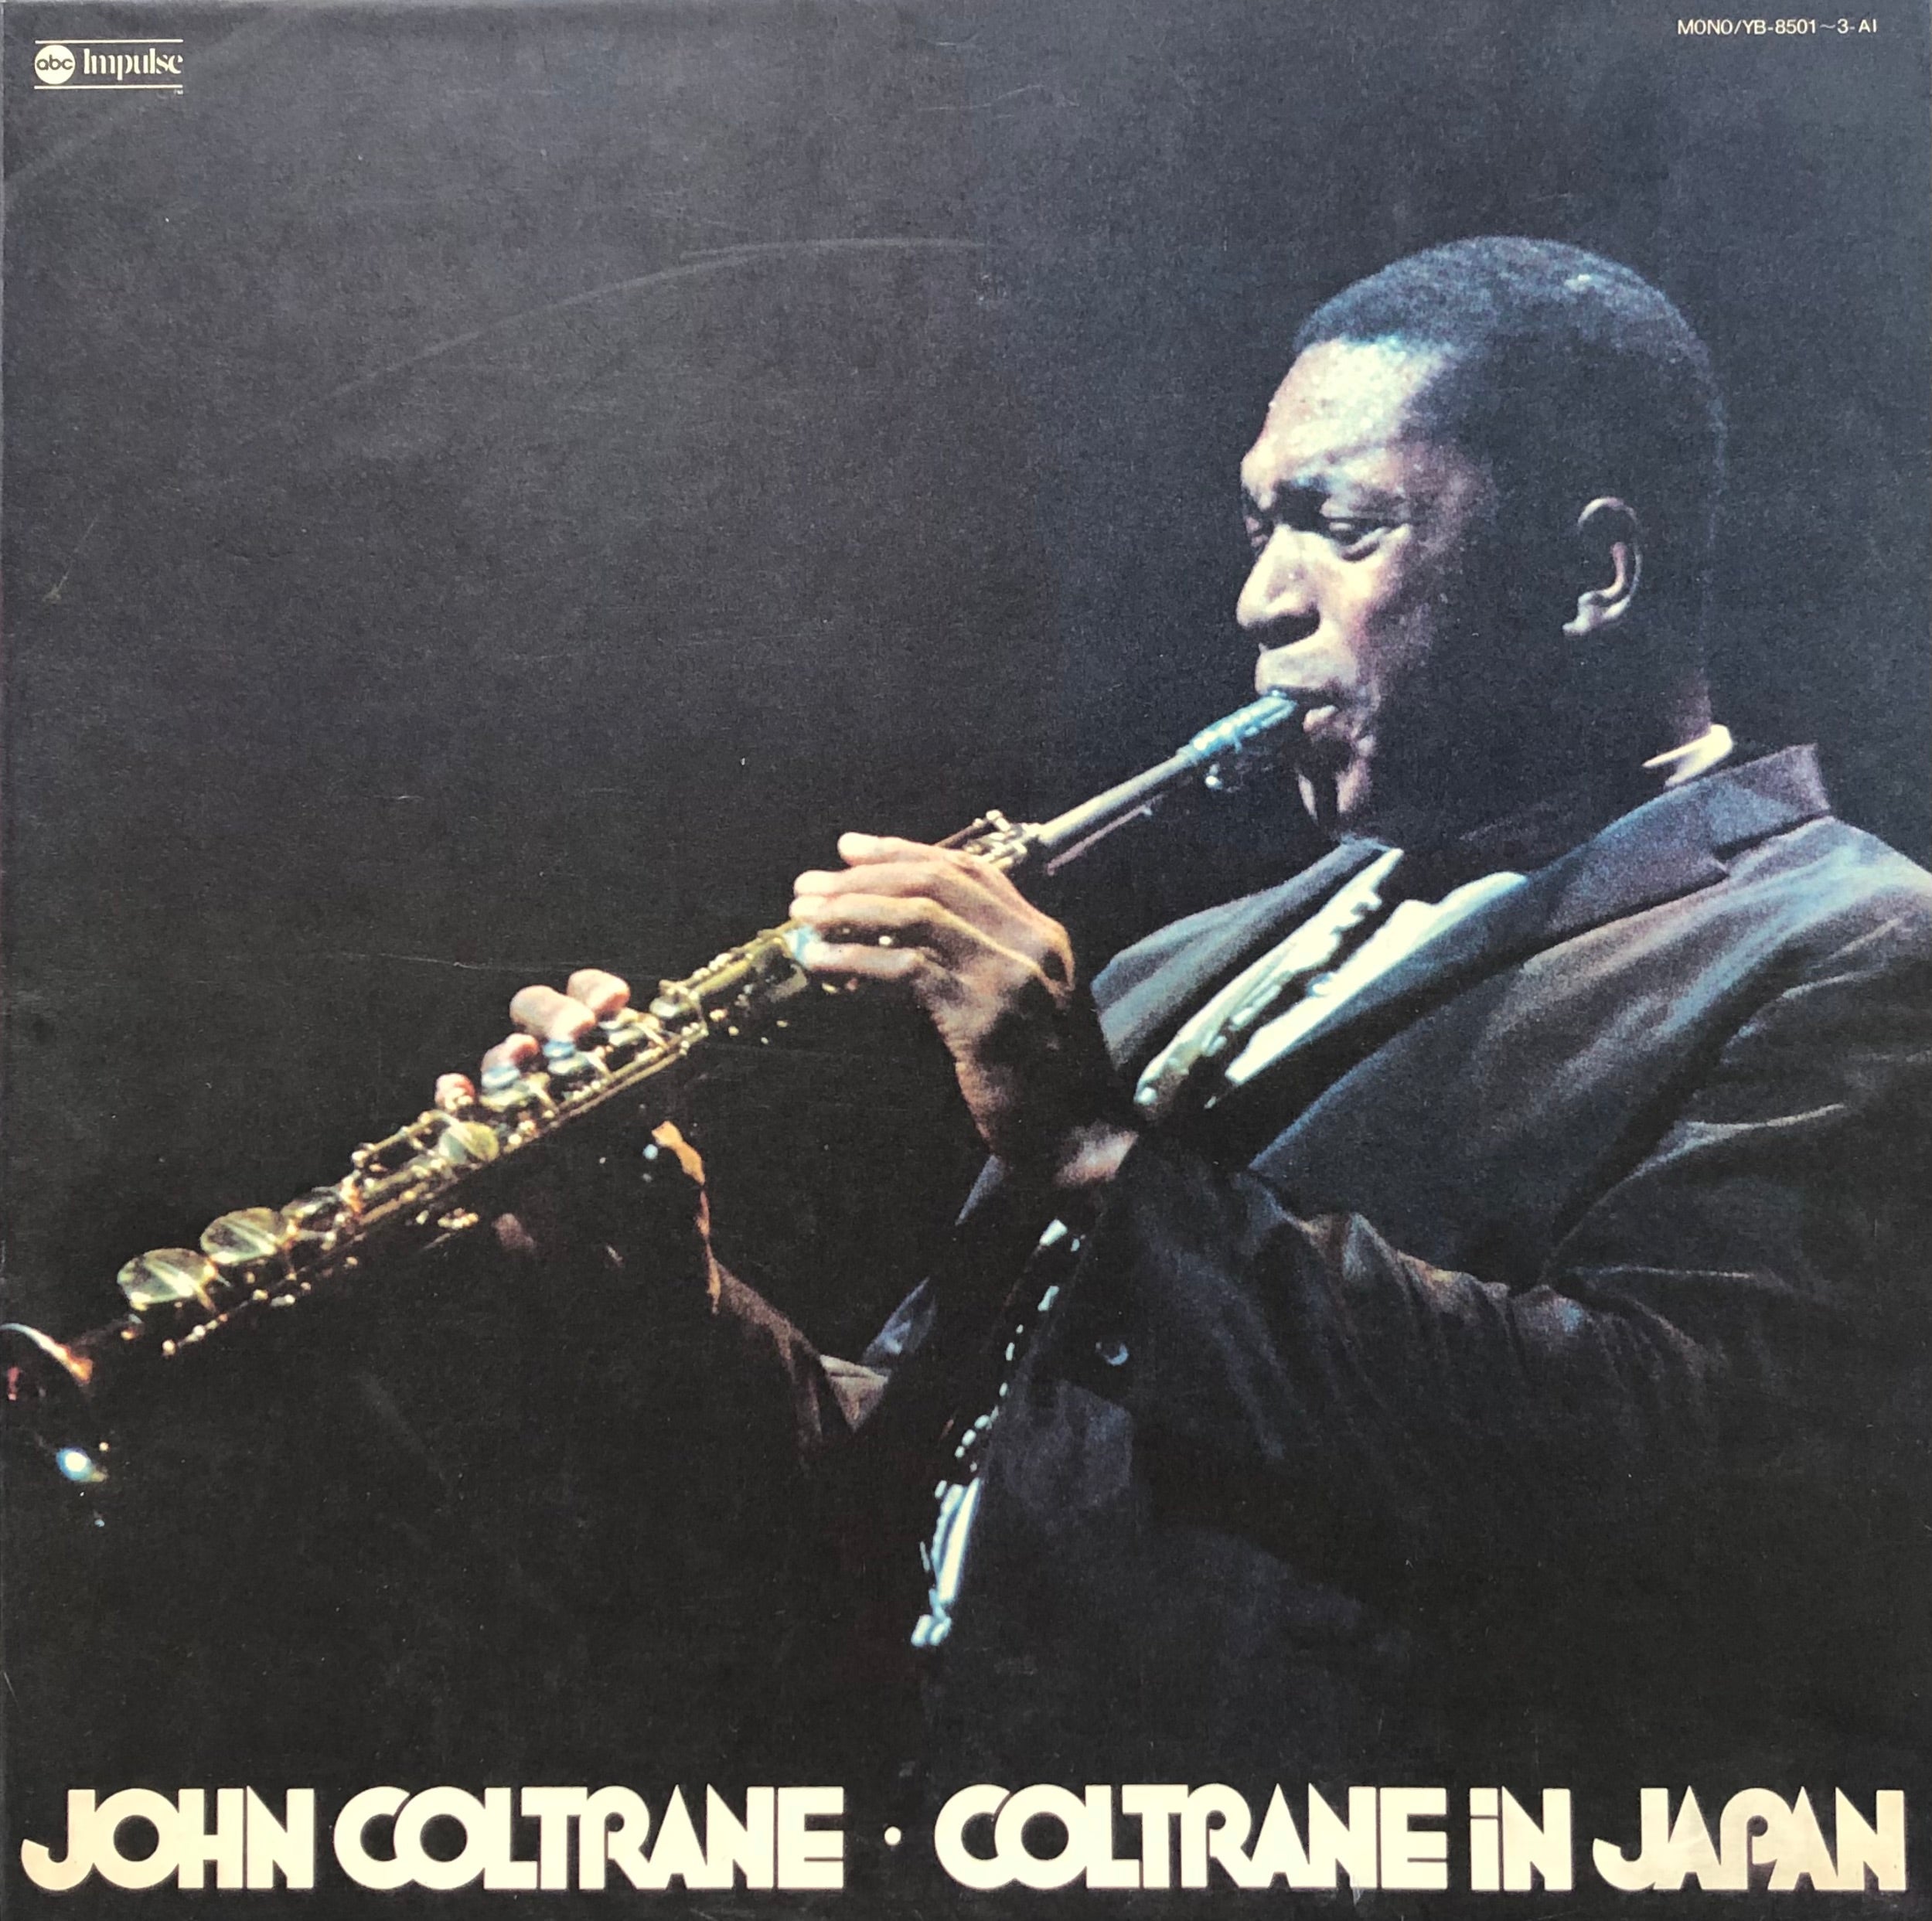 JOHN COLTRANE / Coltrane In Japan (ABC Impulse, YB-8501~3-AI, 3LP 